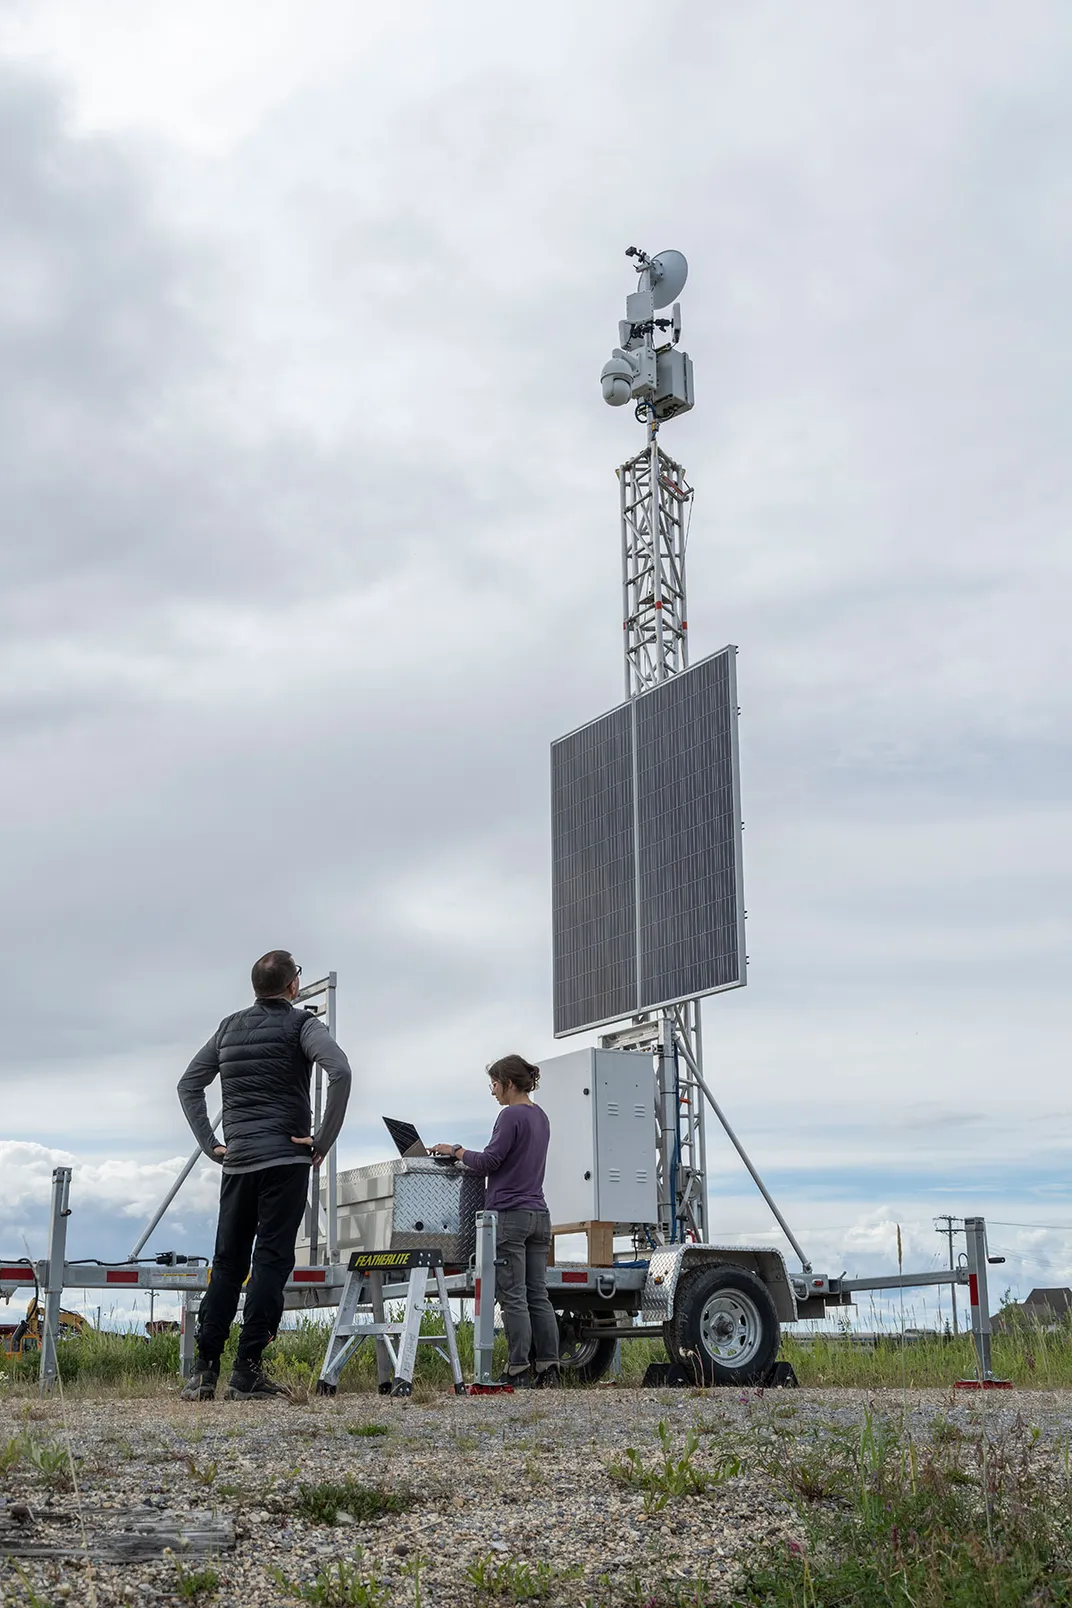 Radar Tower For Detecting Polar Bears